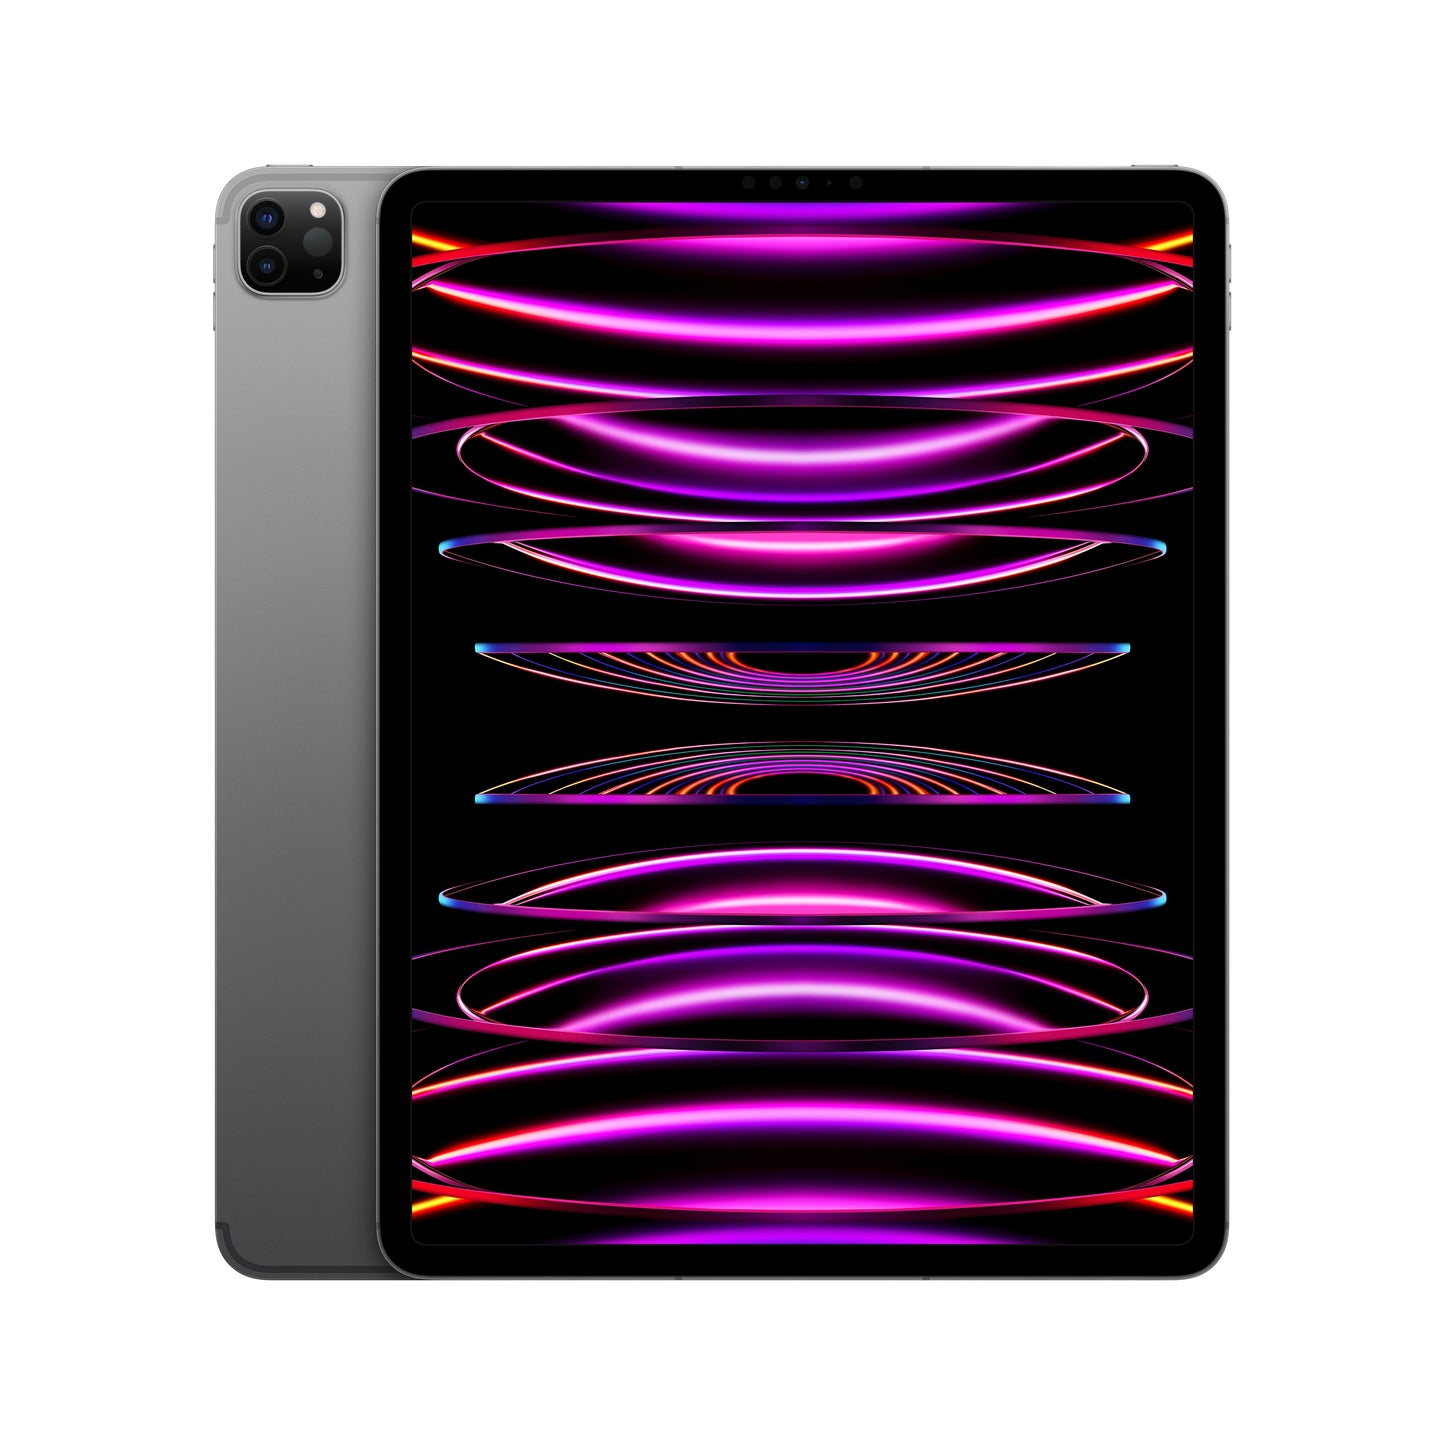 2022 12.9-inch iPad Pro Wi-Fi + Cellular 256GB - Space Gray (6th generation)